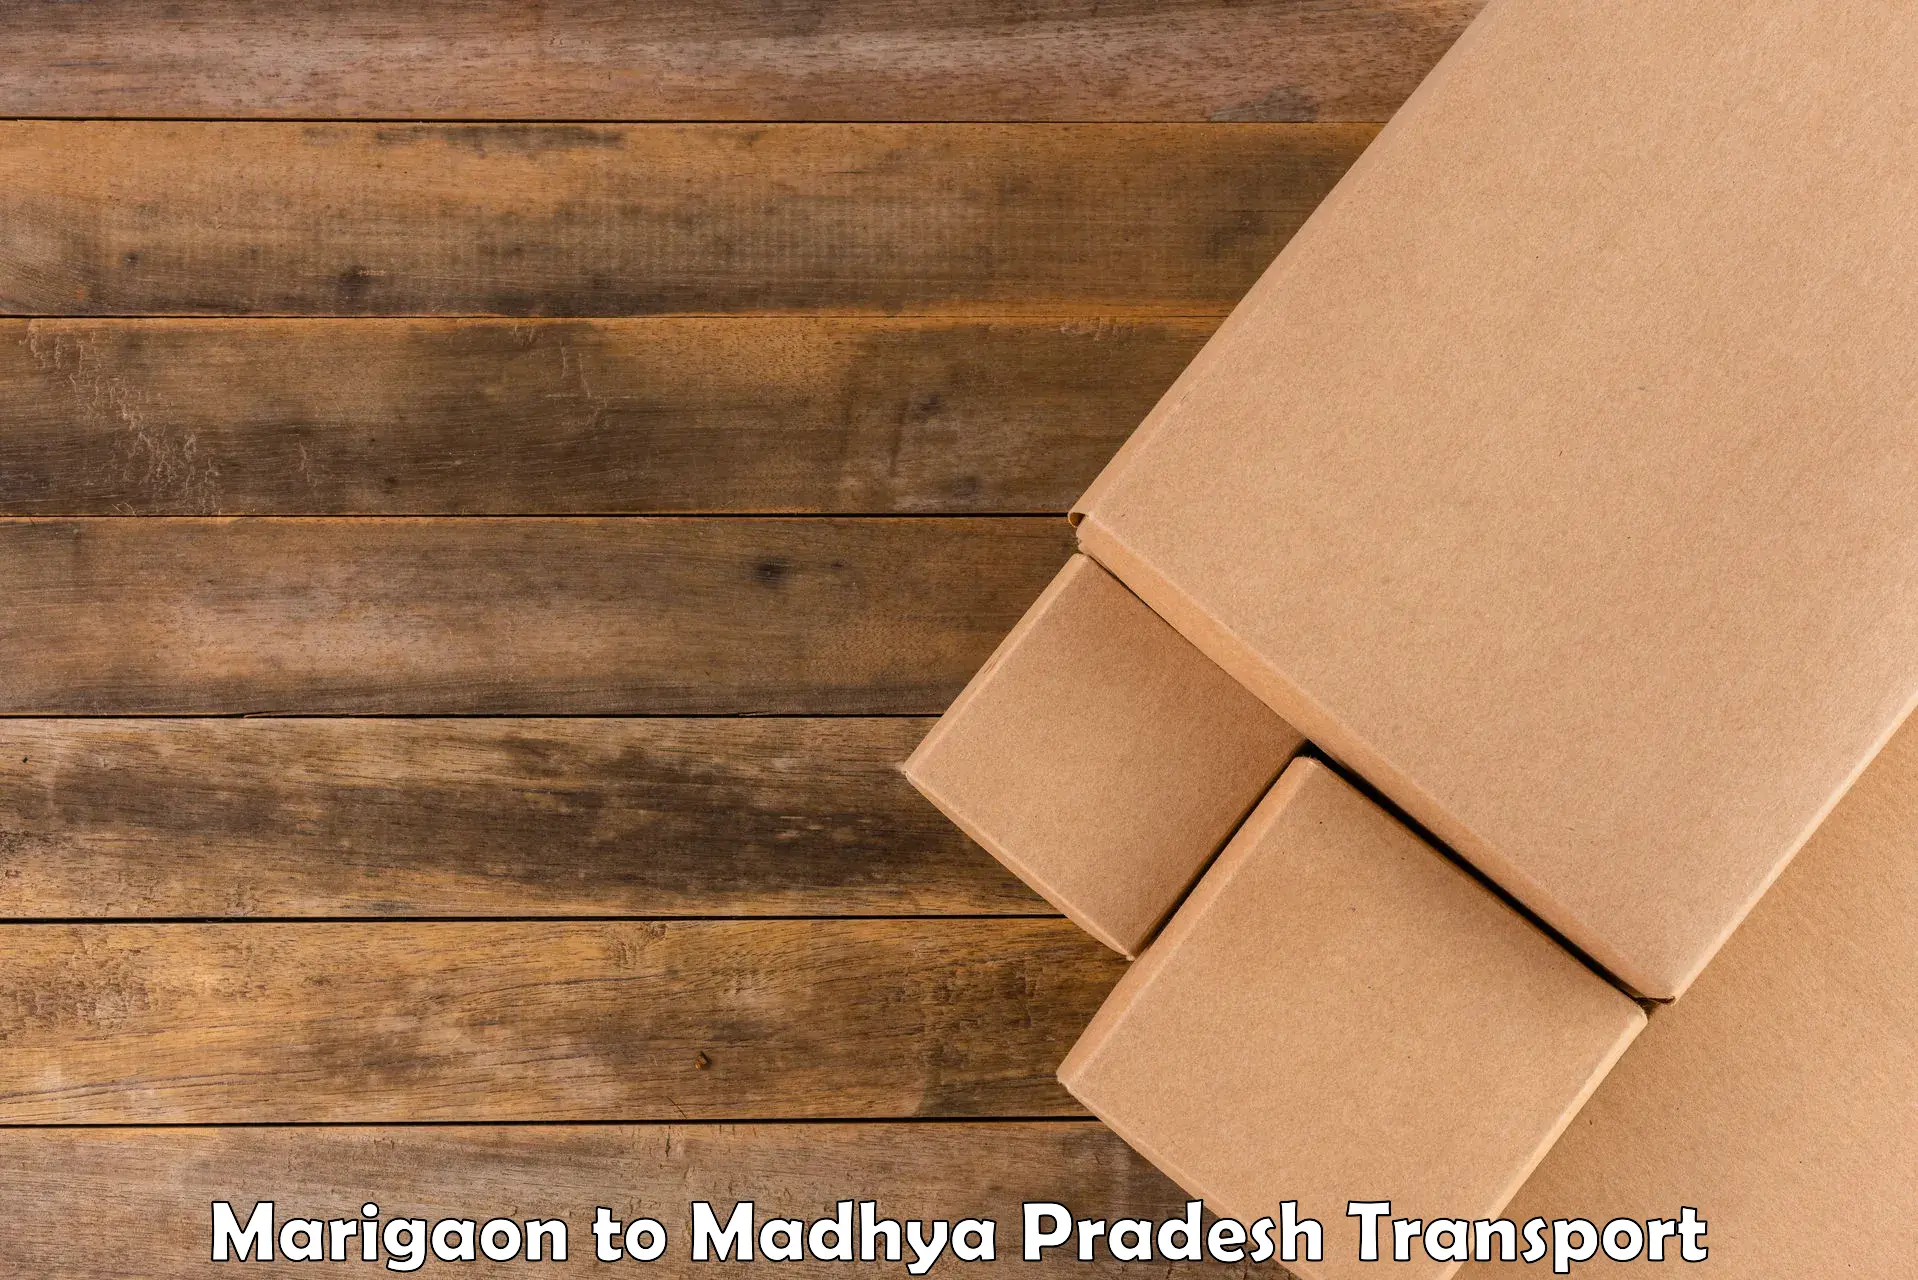 Sending bike to another city Marigaon to Khajuraho